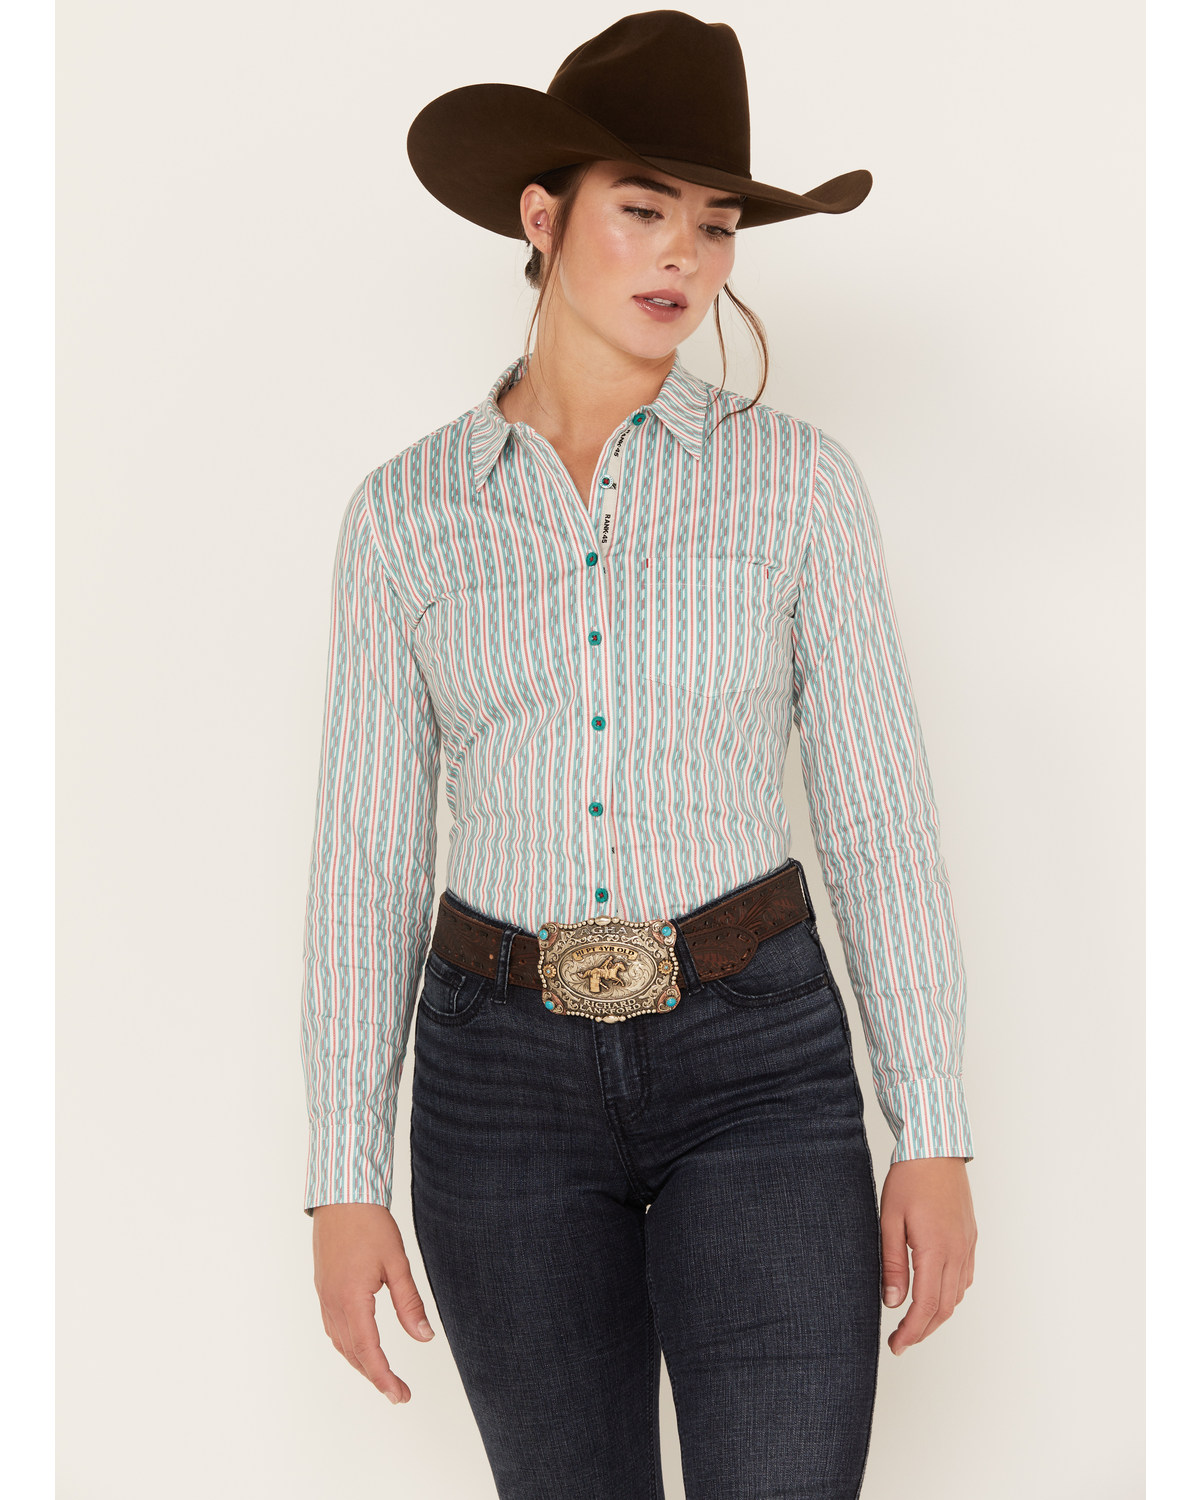 RANK 45® Women's Long Sleeve Button-Down Striped Poplin Western Riding Shirt